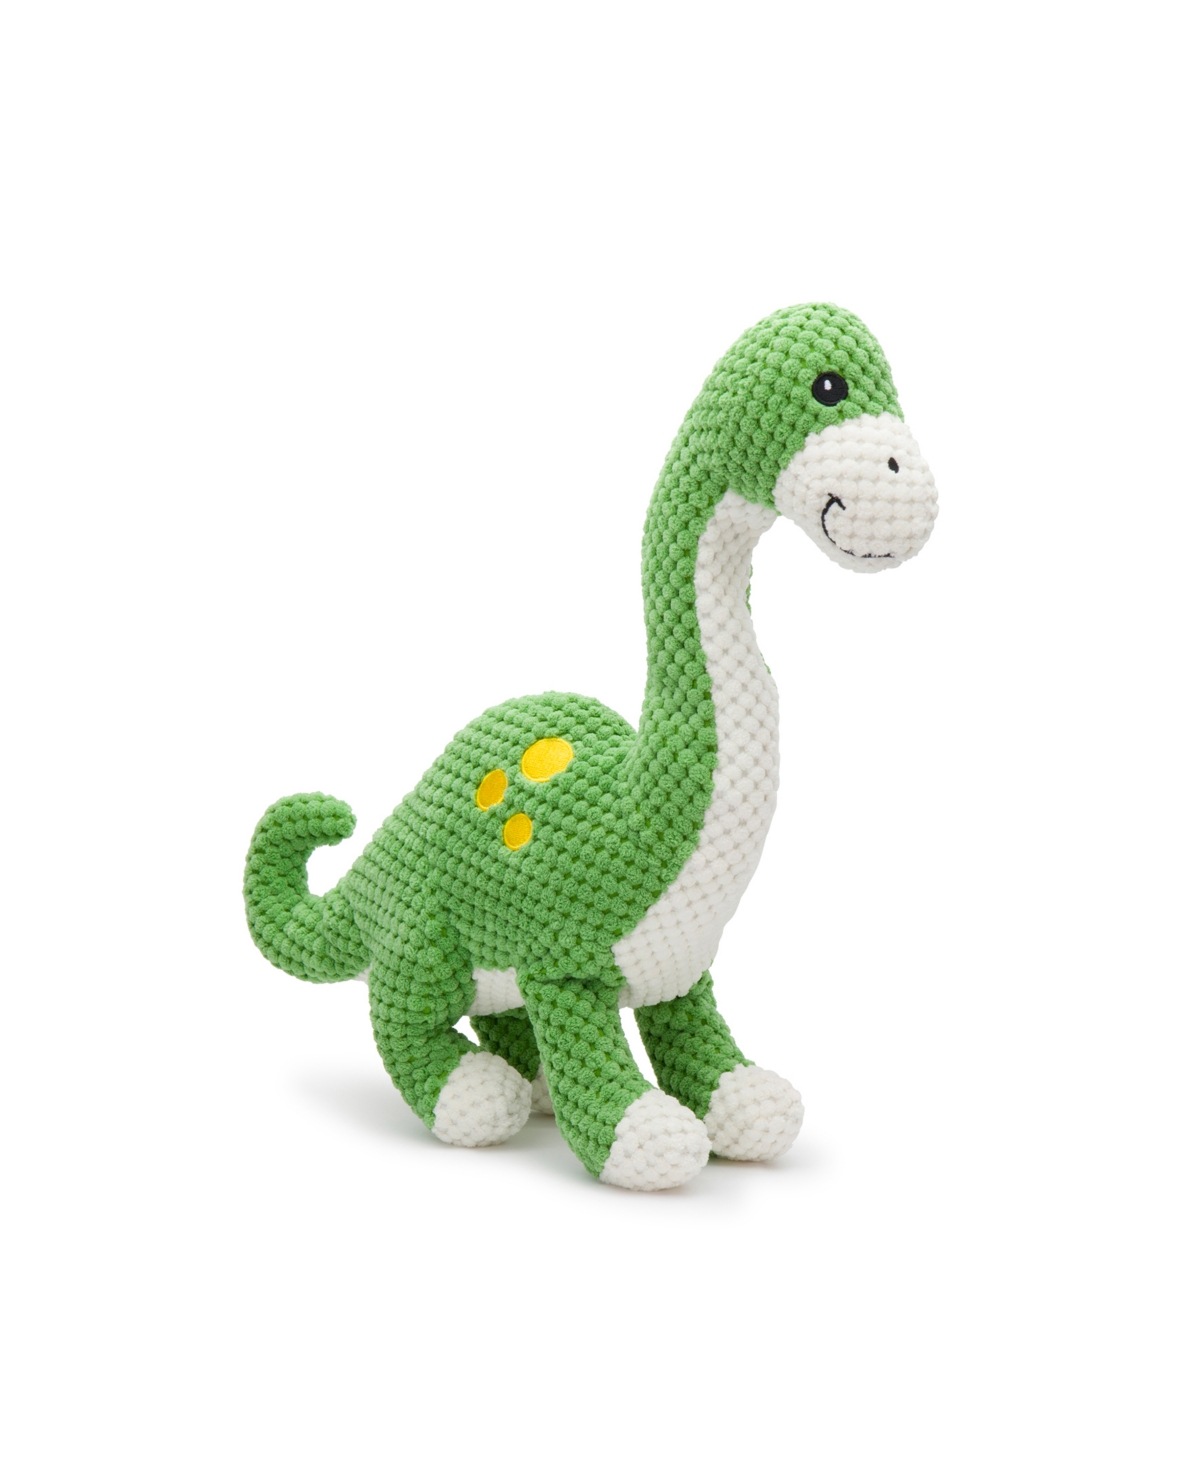 Floppy Brontosaurus - Green